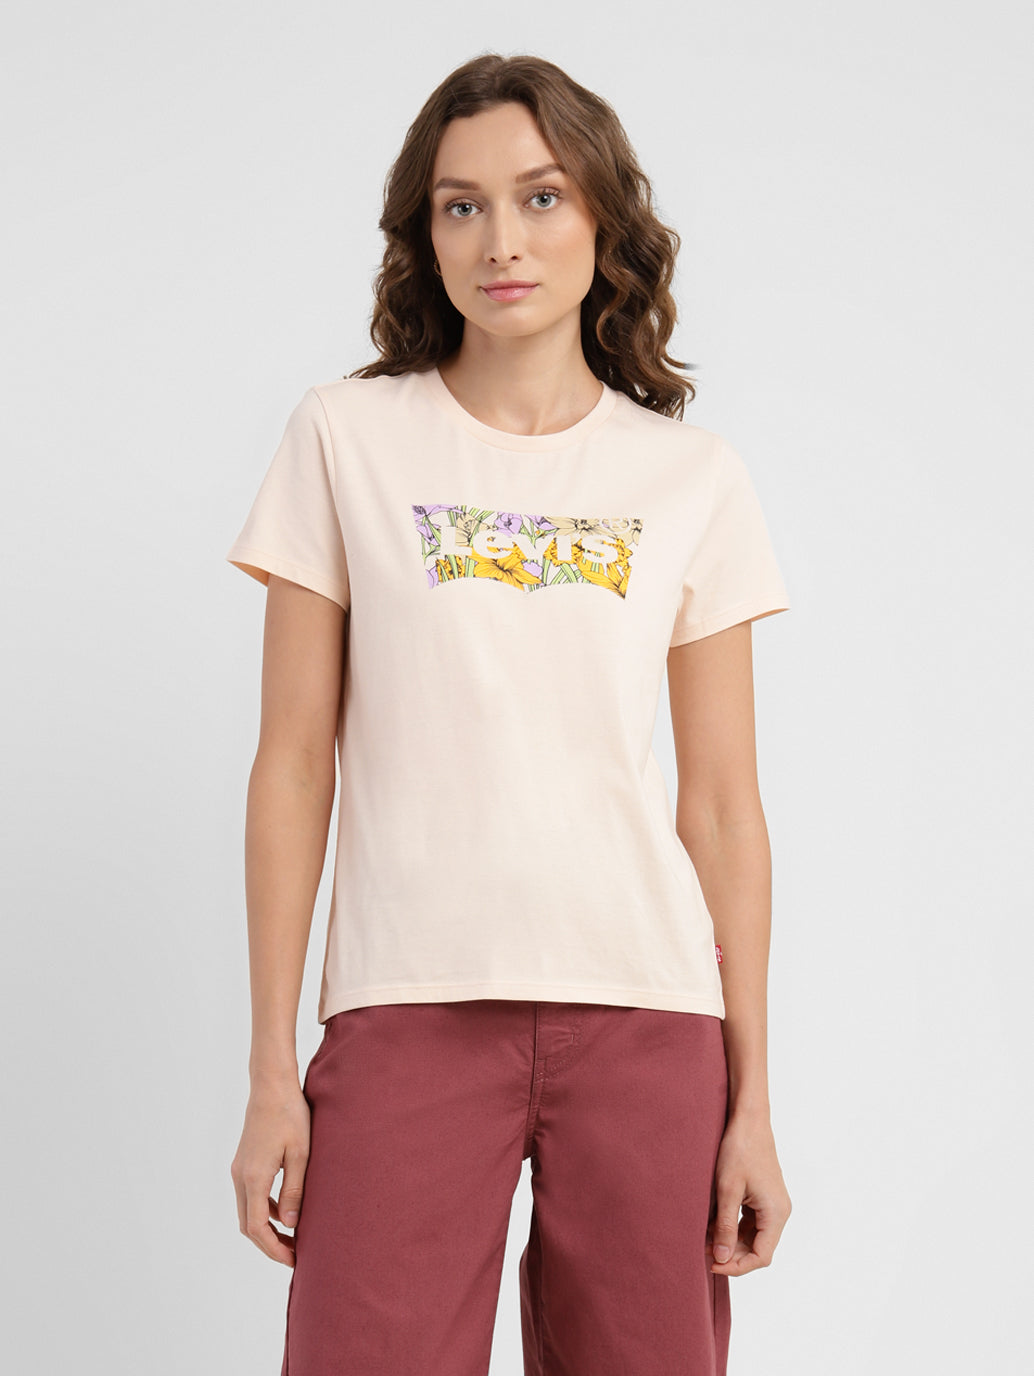 Women's Graphic Print Round Neck T-shirt